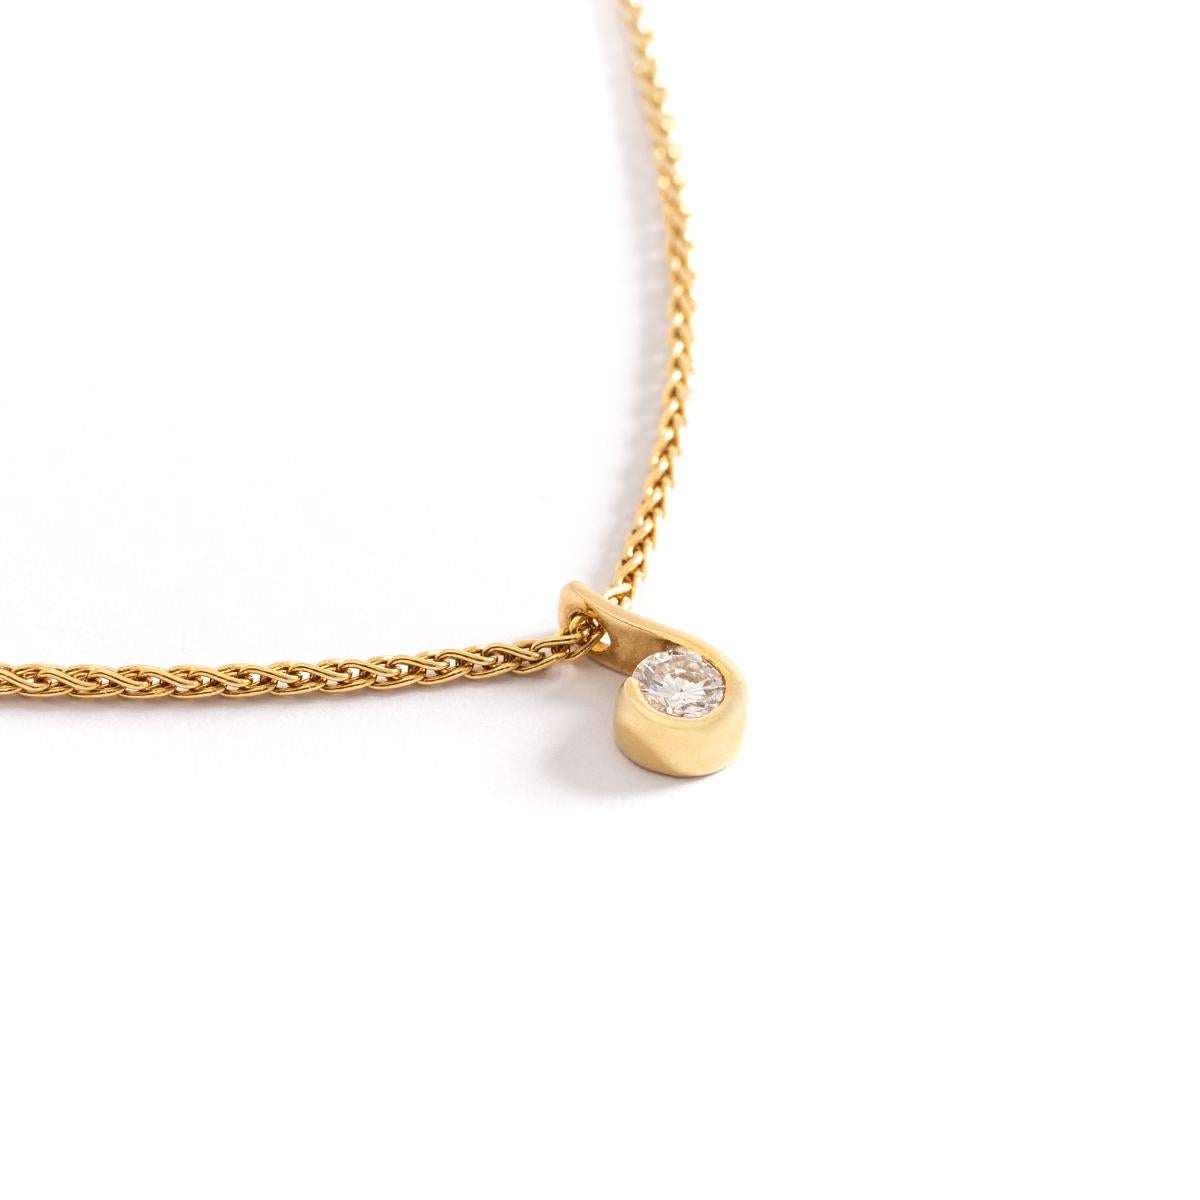 Diamond yellow gold chain necklace.
Diamond estimated weight: 0.41 carat.
Pendant length: 1.00 centimeter.
Chain length: 41.00 centimeters.
Gross weight: 6.54 grams
